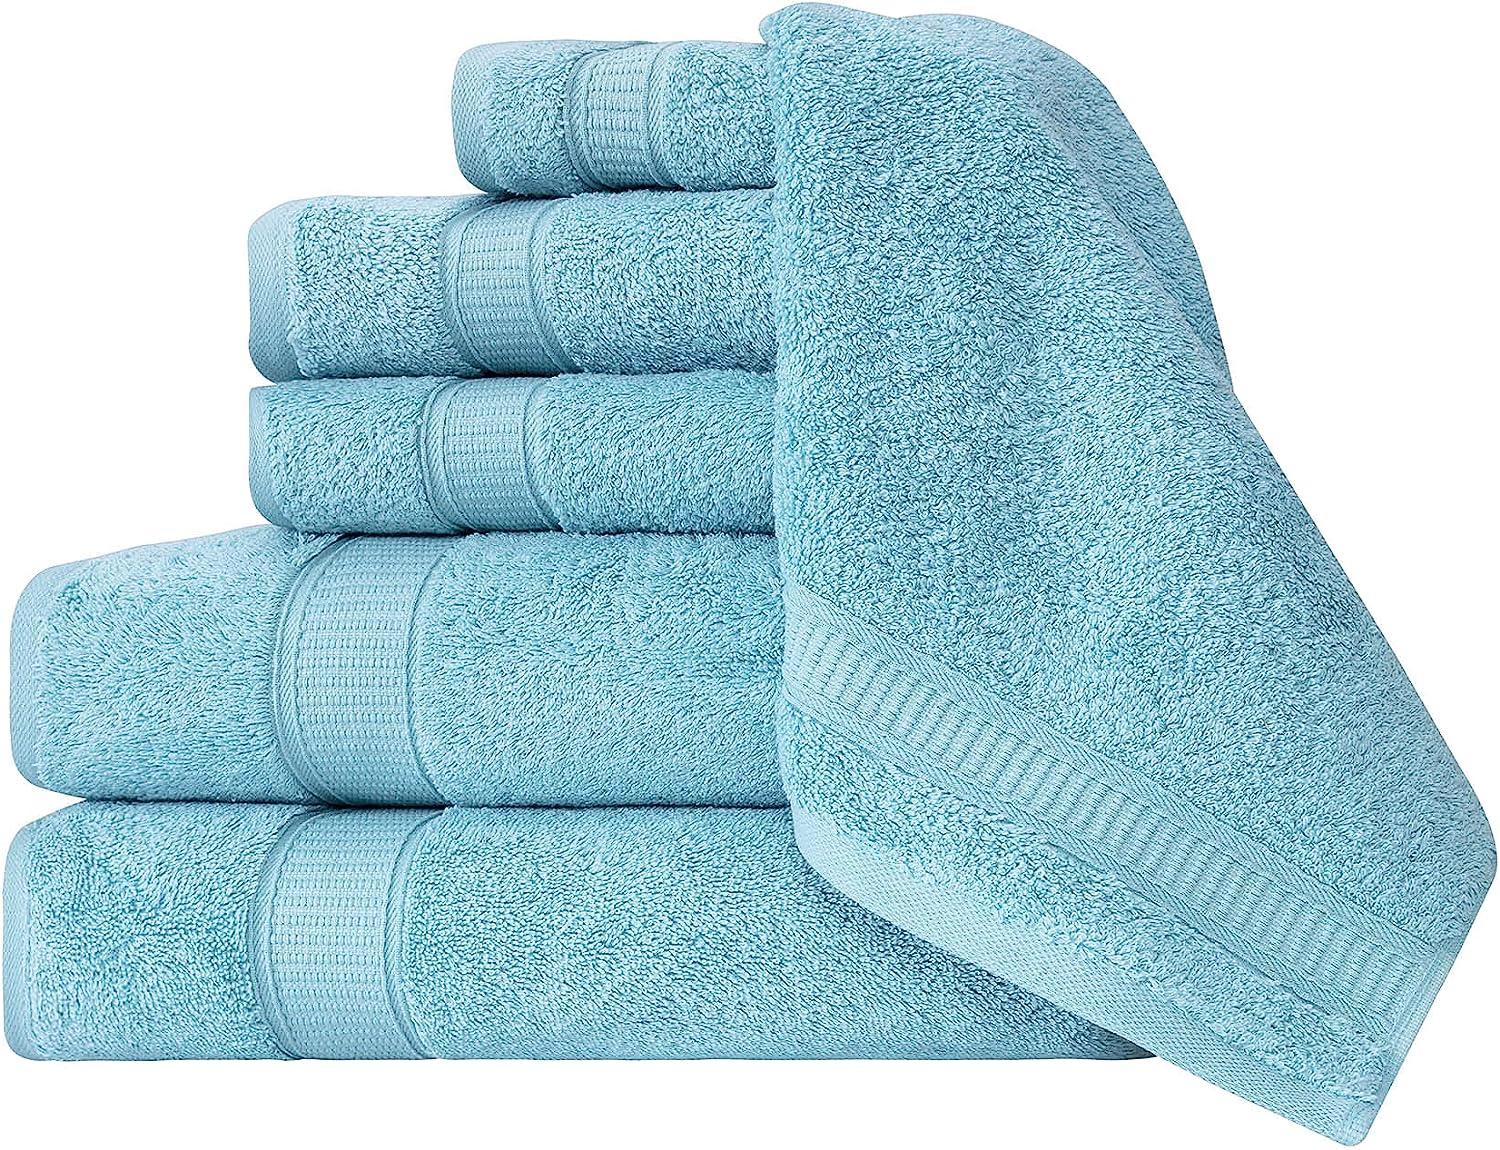 Turkish Linens Luxury Spa and Hotel Quality Premium Cotton 6-Piece Towel Set (2 x Bath Towels, 2 x Hand Towels, 2 x Washcloths), Coral